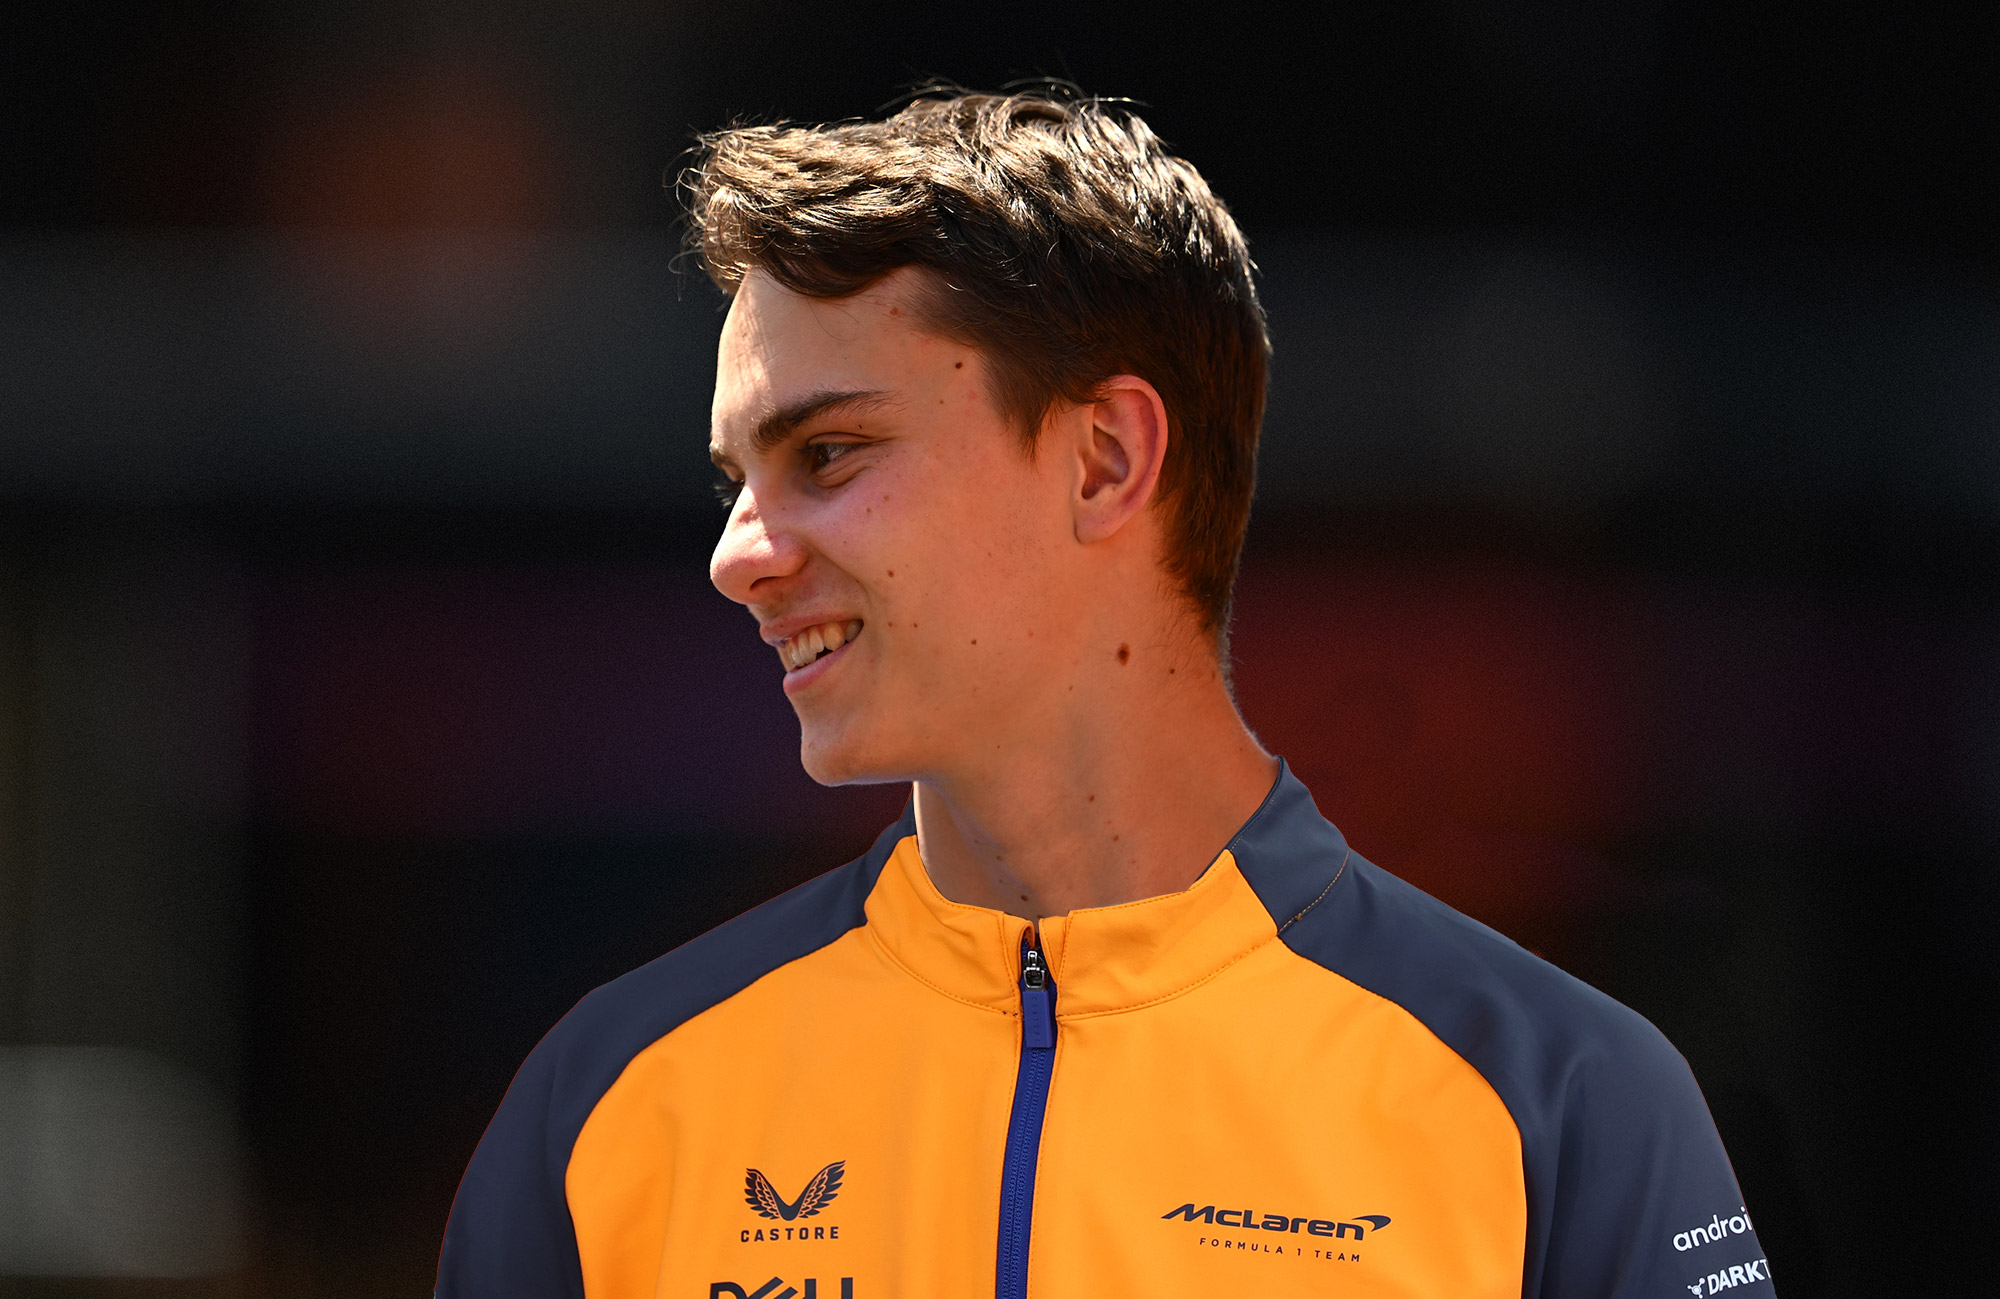 It’s Confirmed: Oscar Piastri Will Race For McLaren In 2023